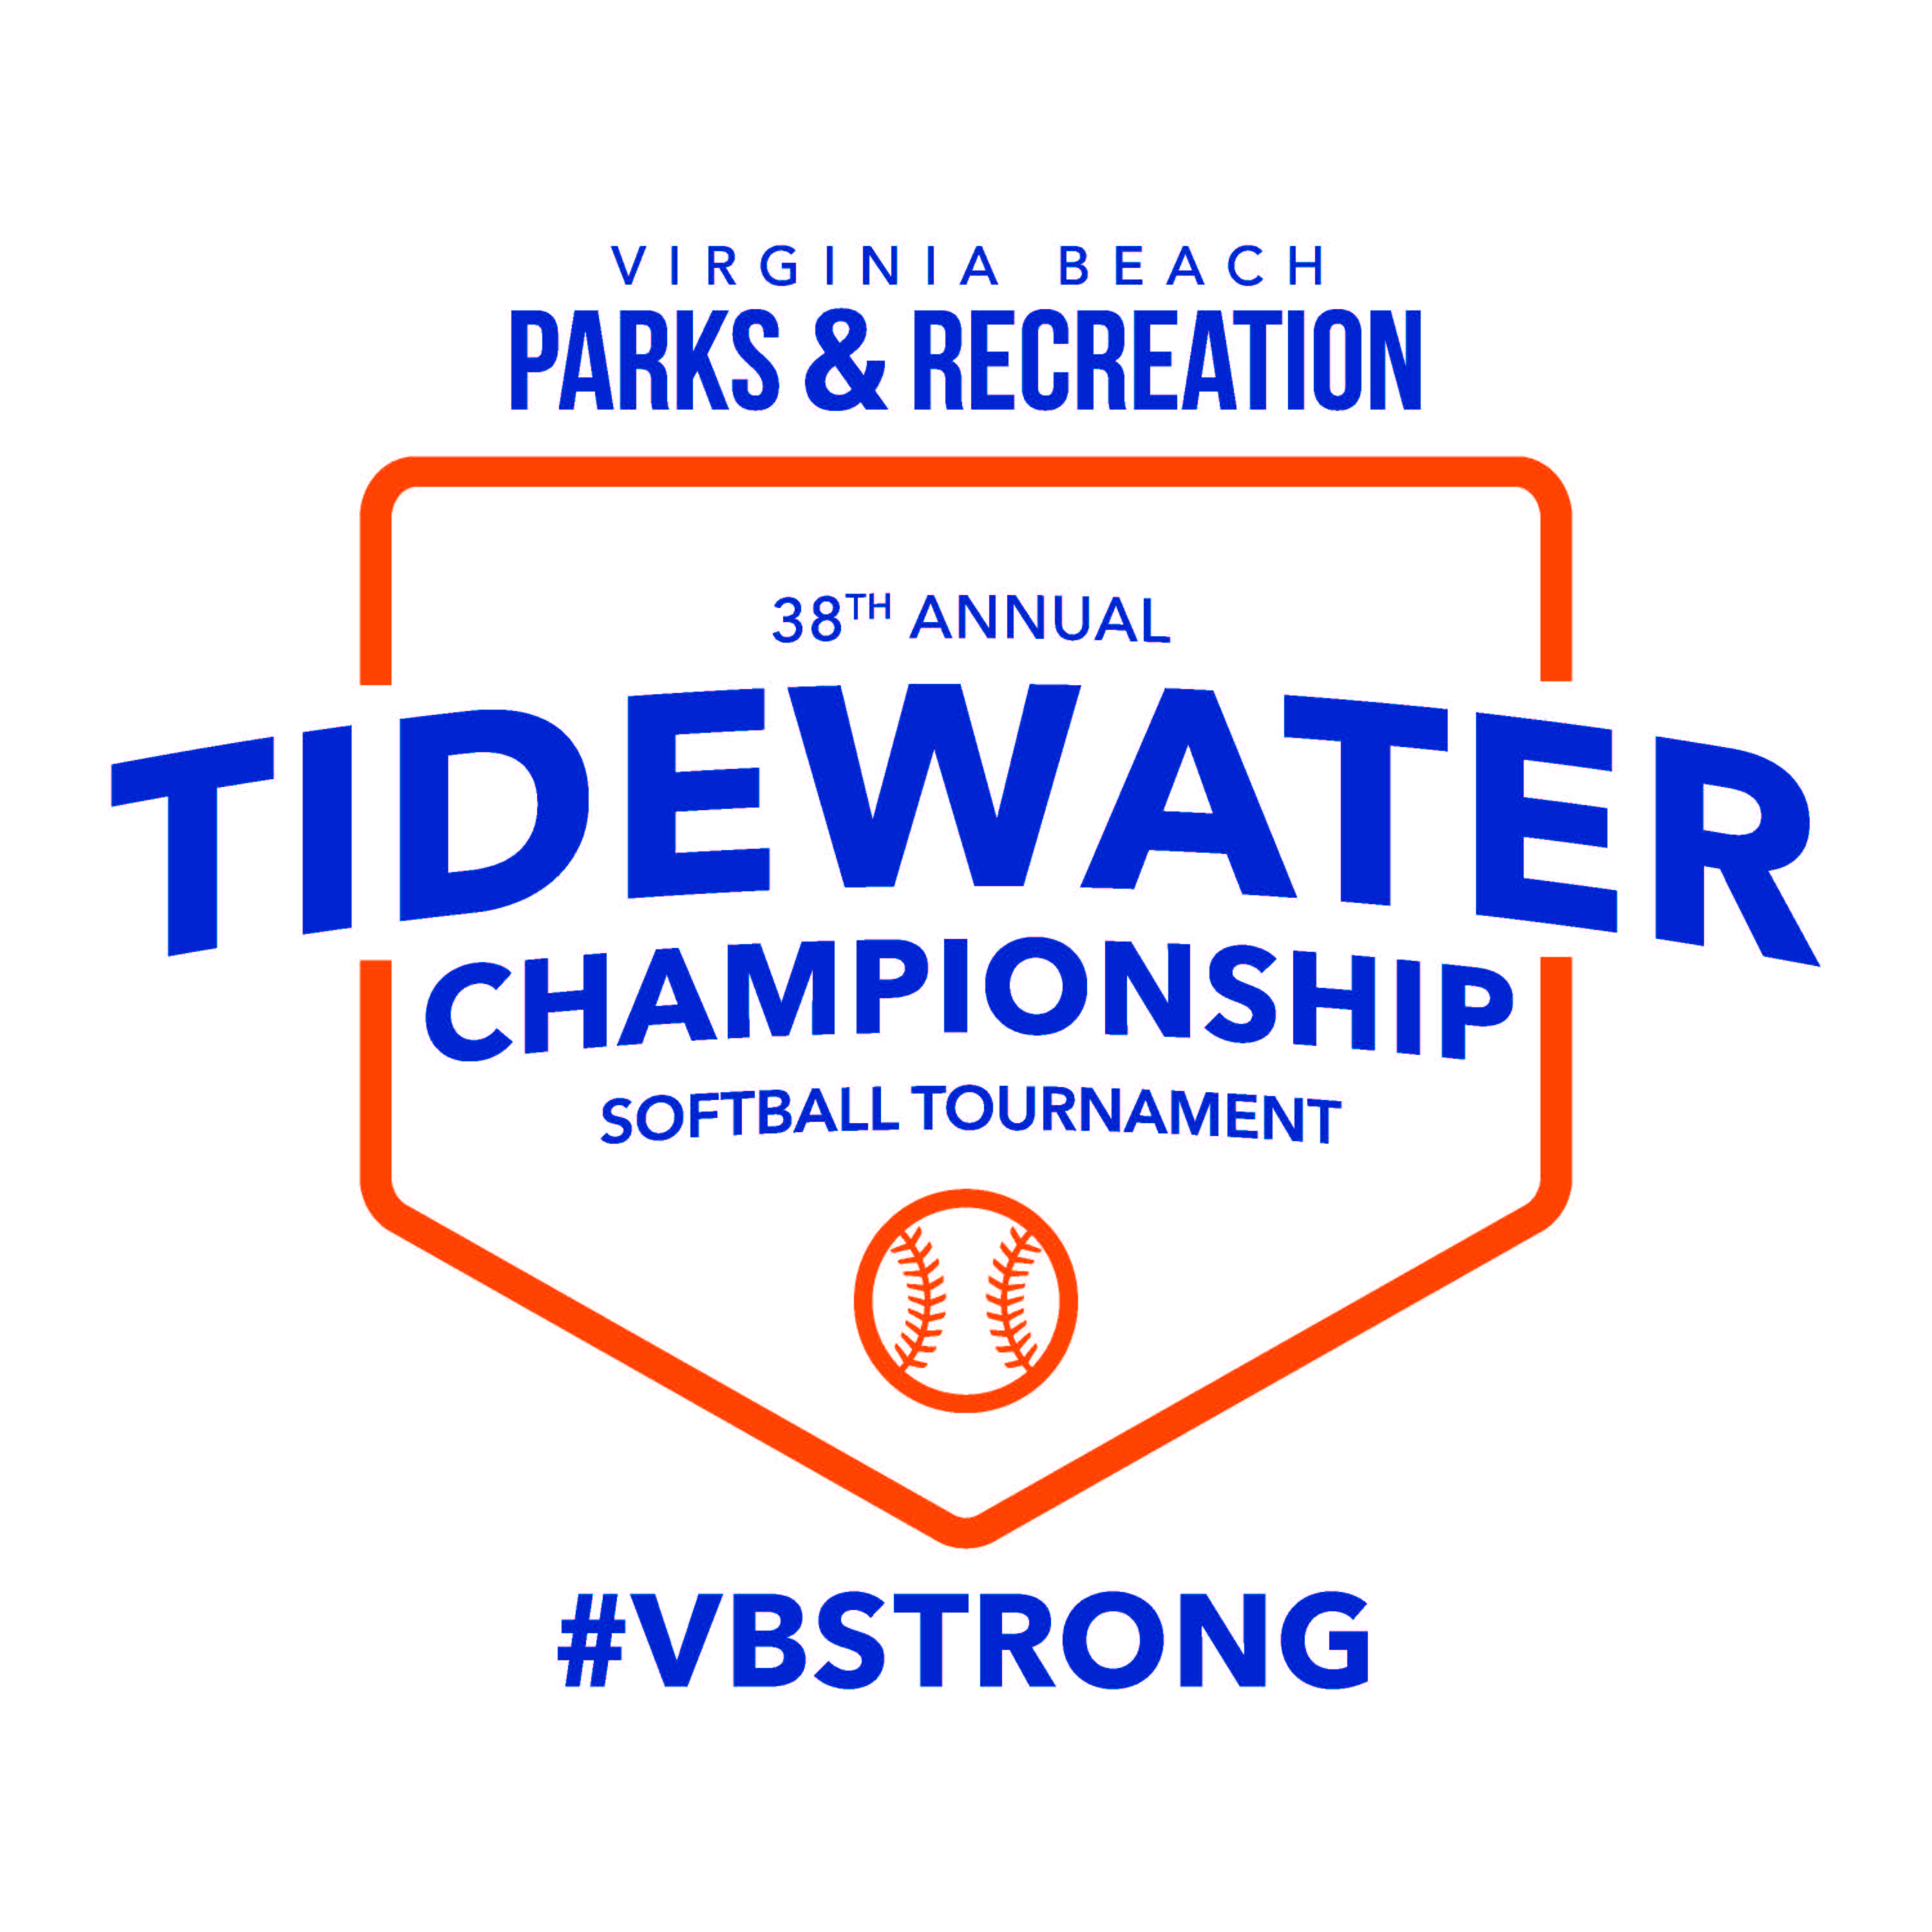 Tidewater Logo - Tidewater Softball Championship - VBgov.com of Virginia Beach